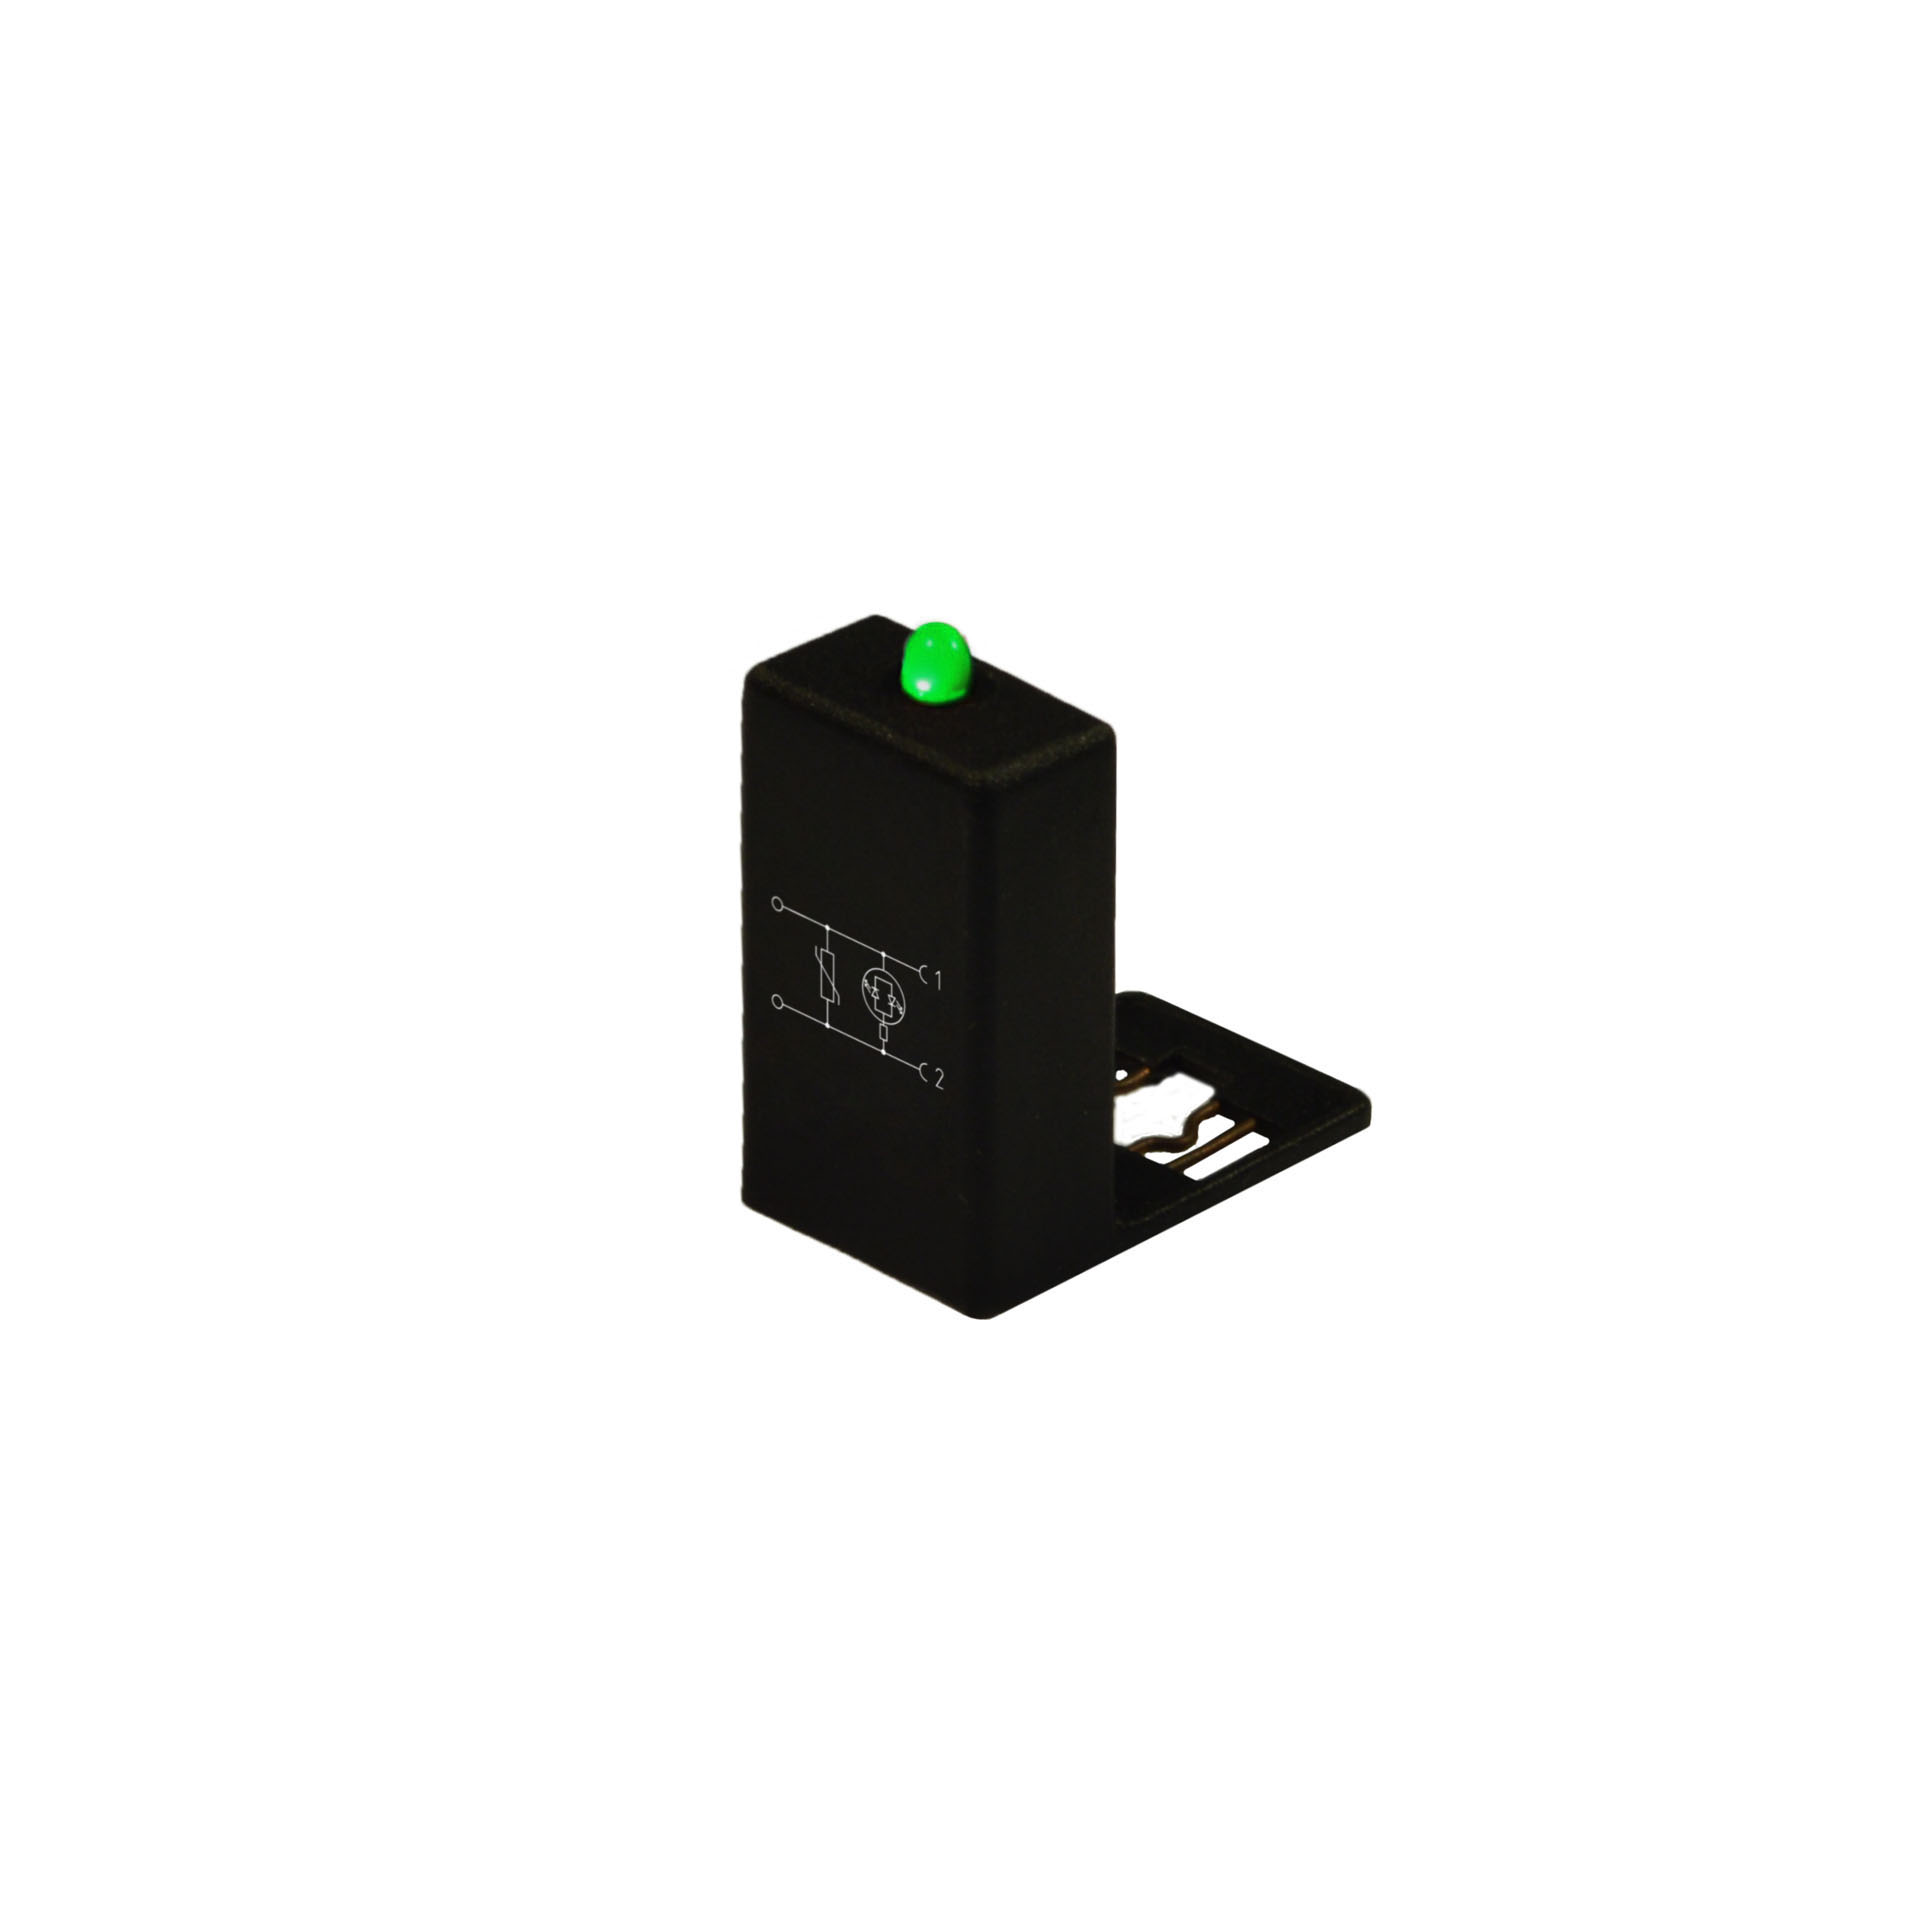 Adapter for DIN43650/C,9,4mm,2P+E,with GREEN LED + VARISTOR 24V